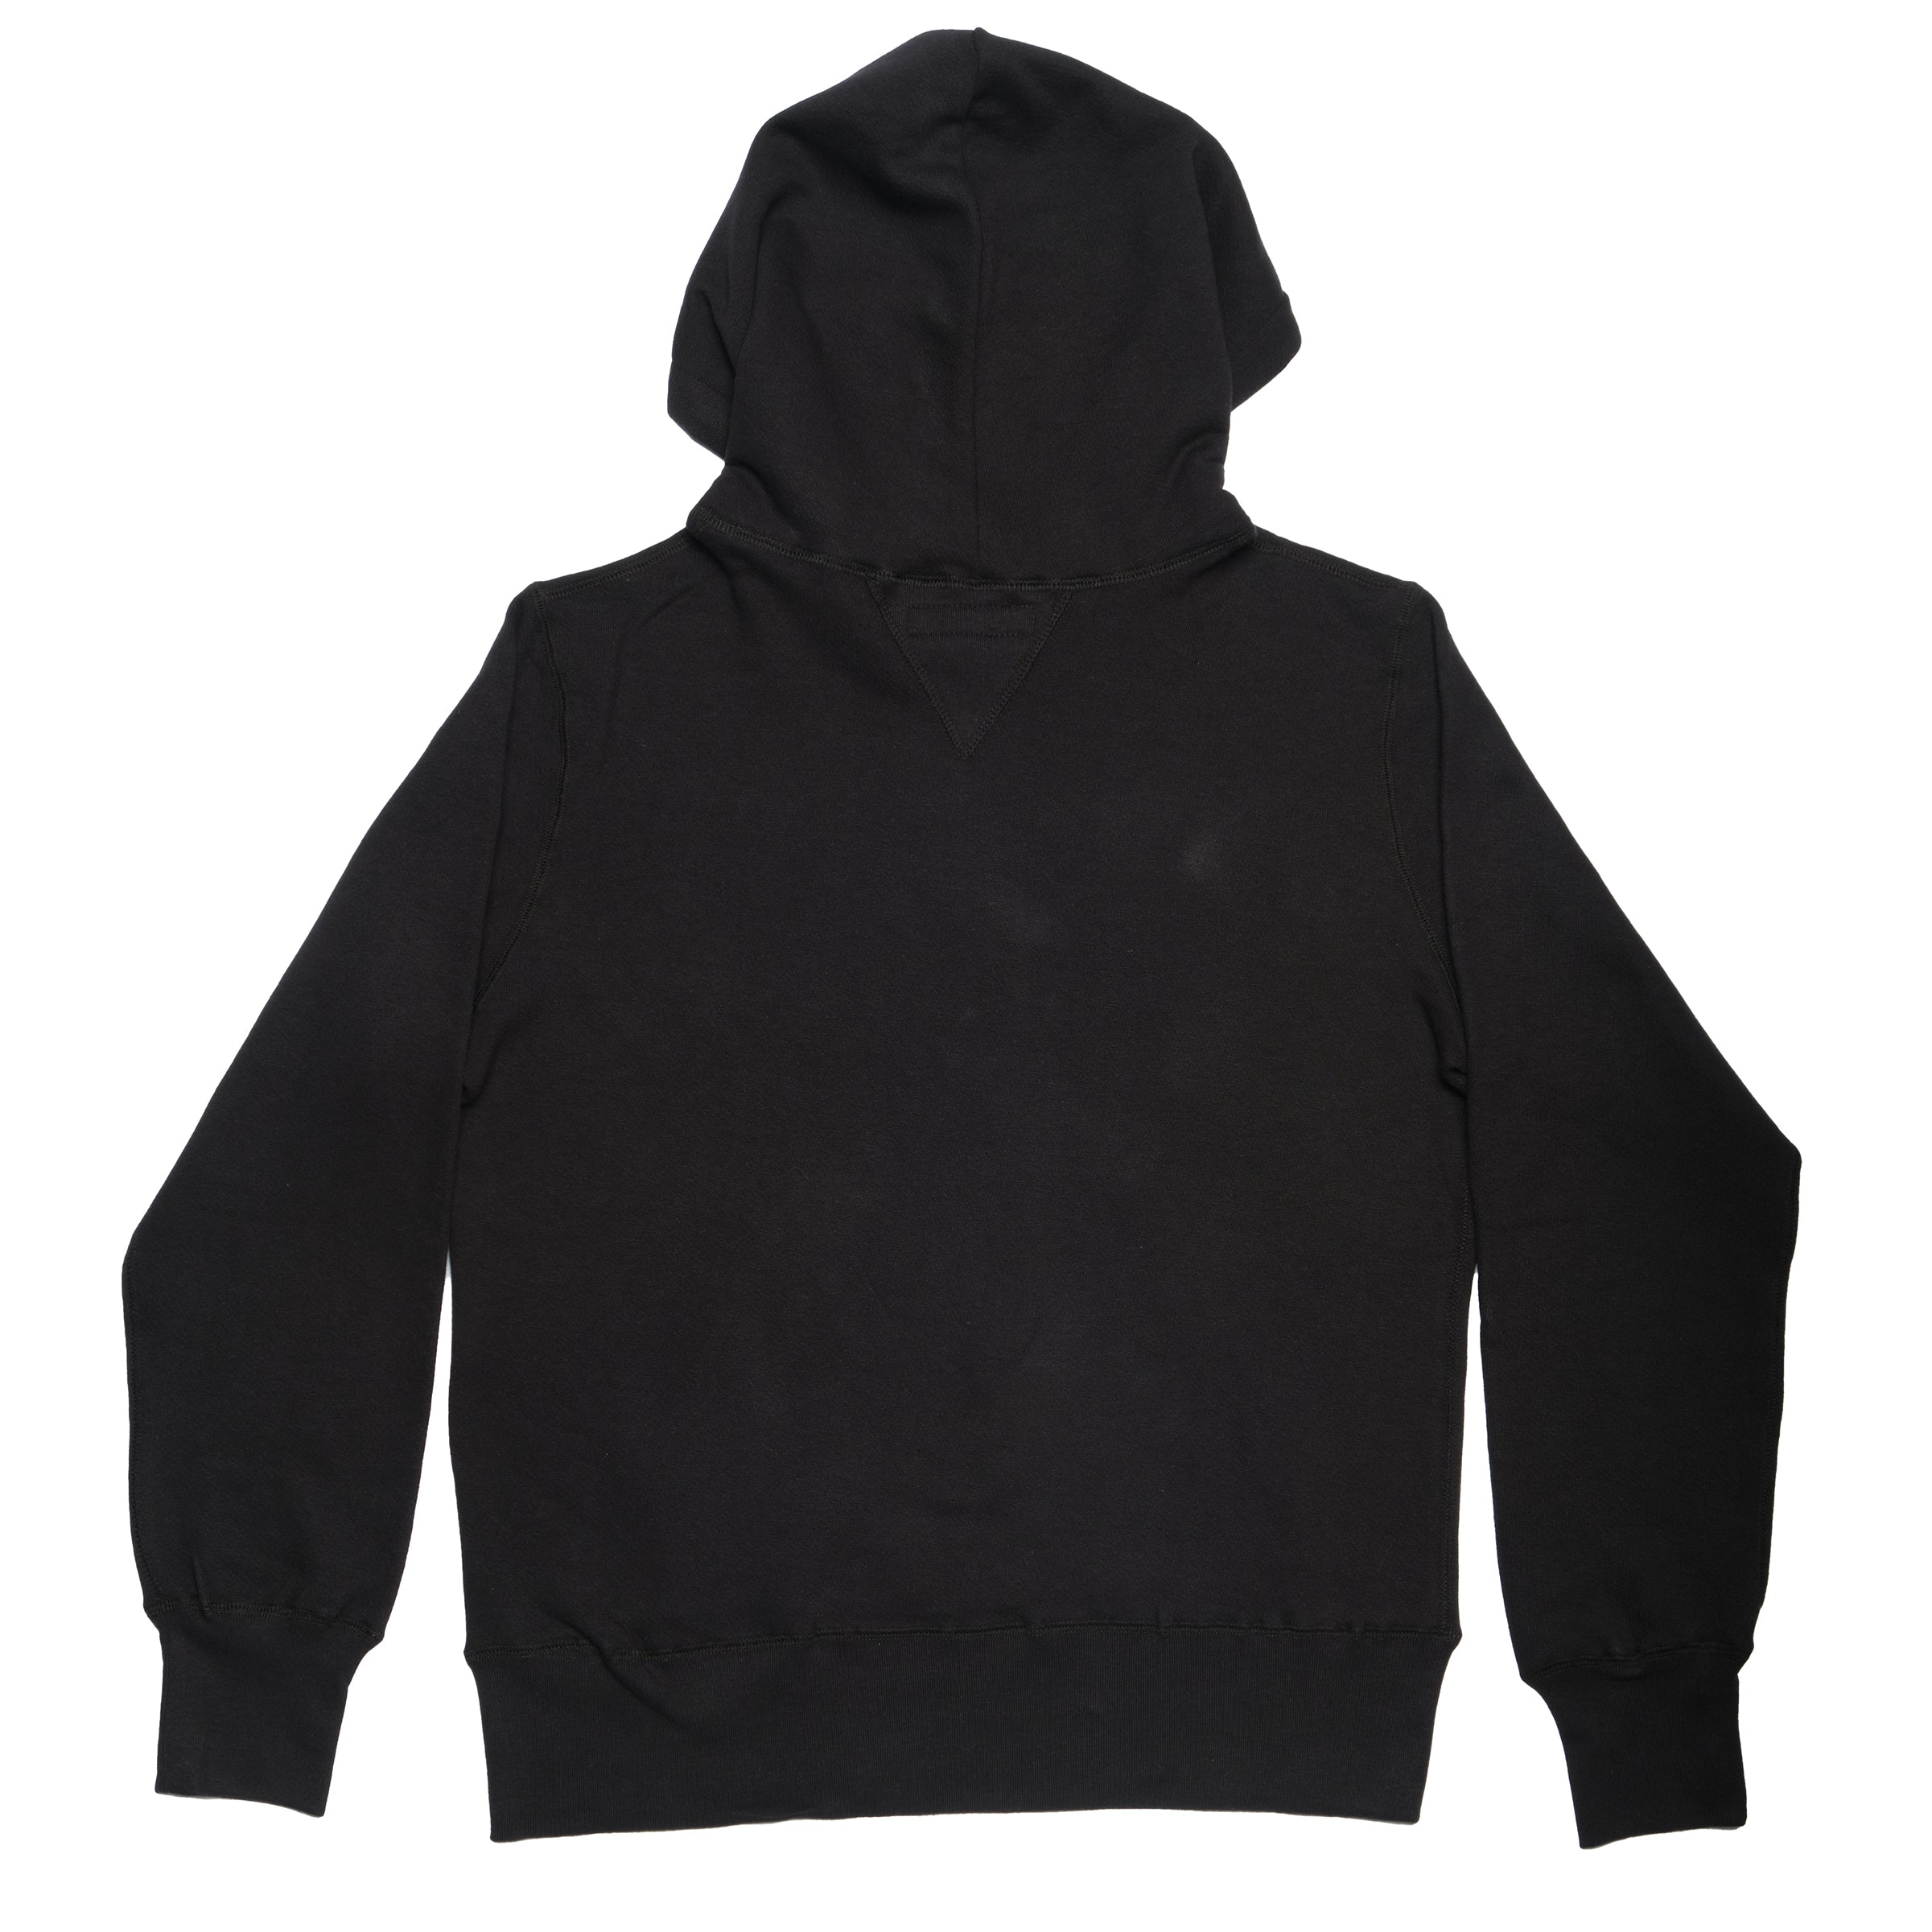 Jane Organic Hooded Sweatshirt - 21st Bombardier - Black